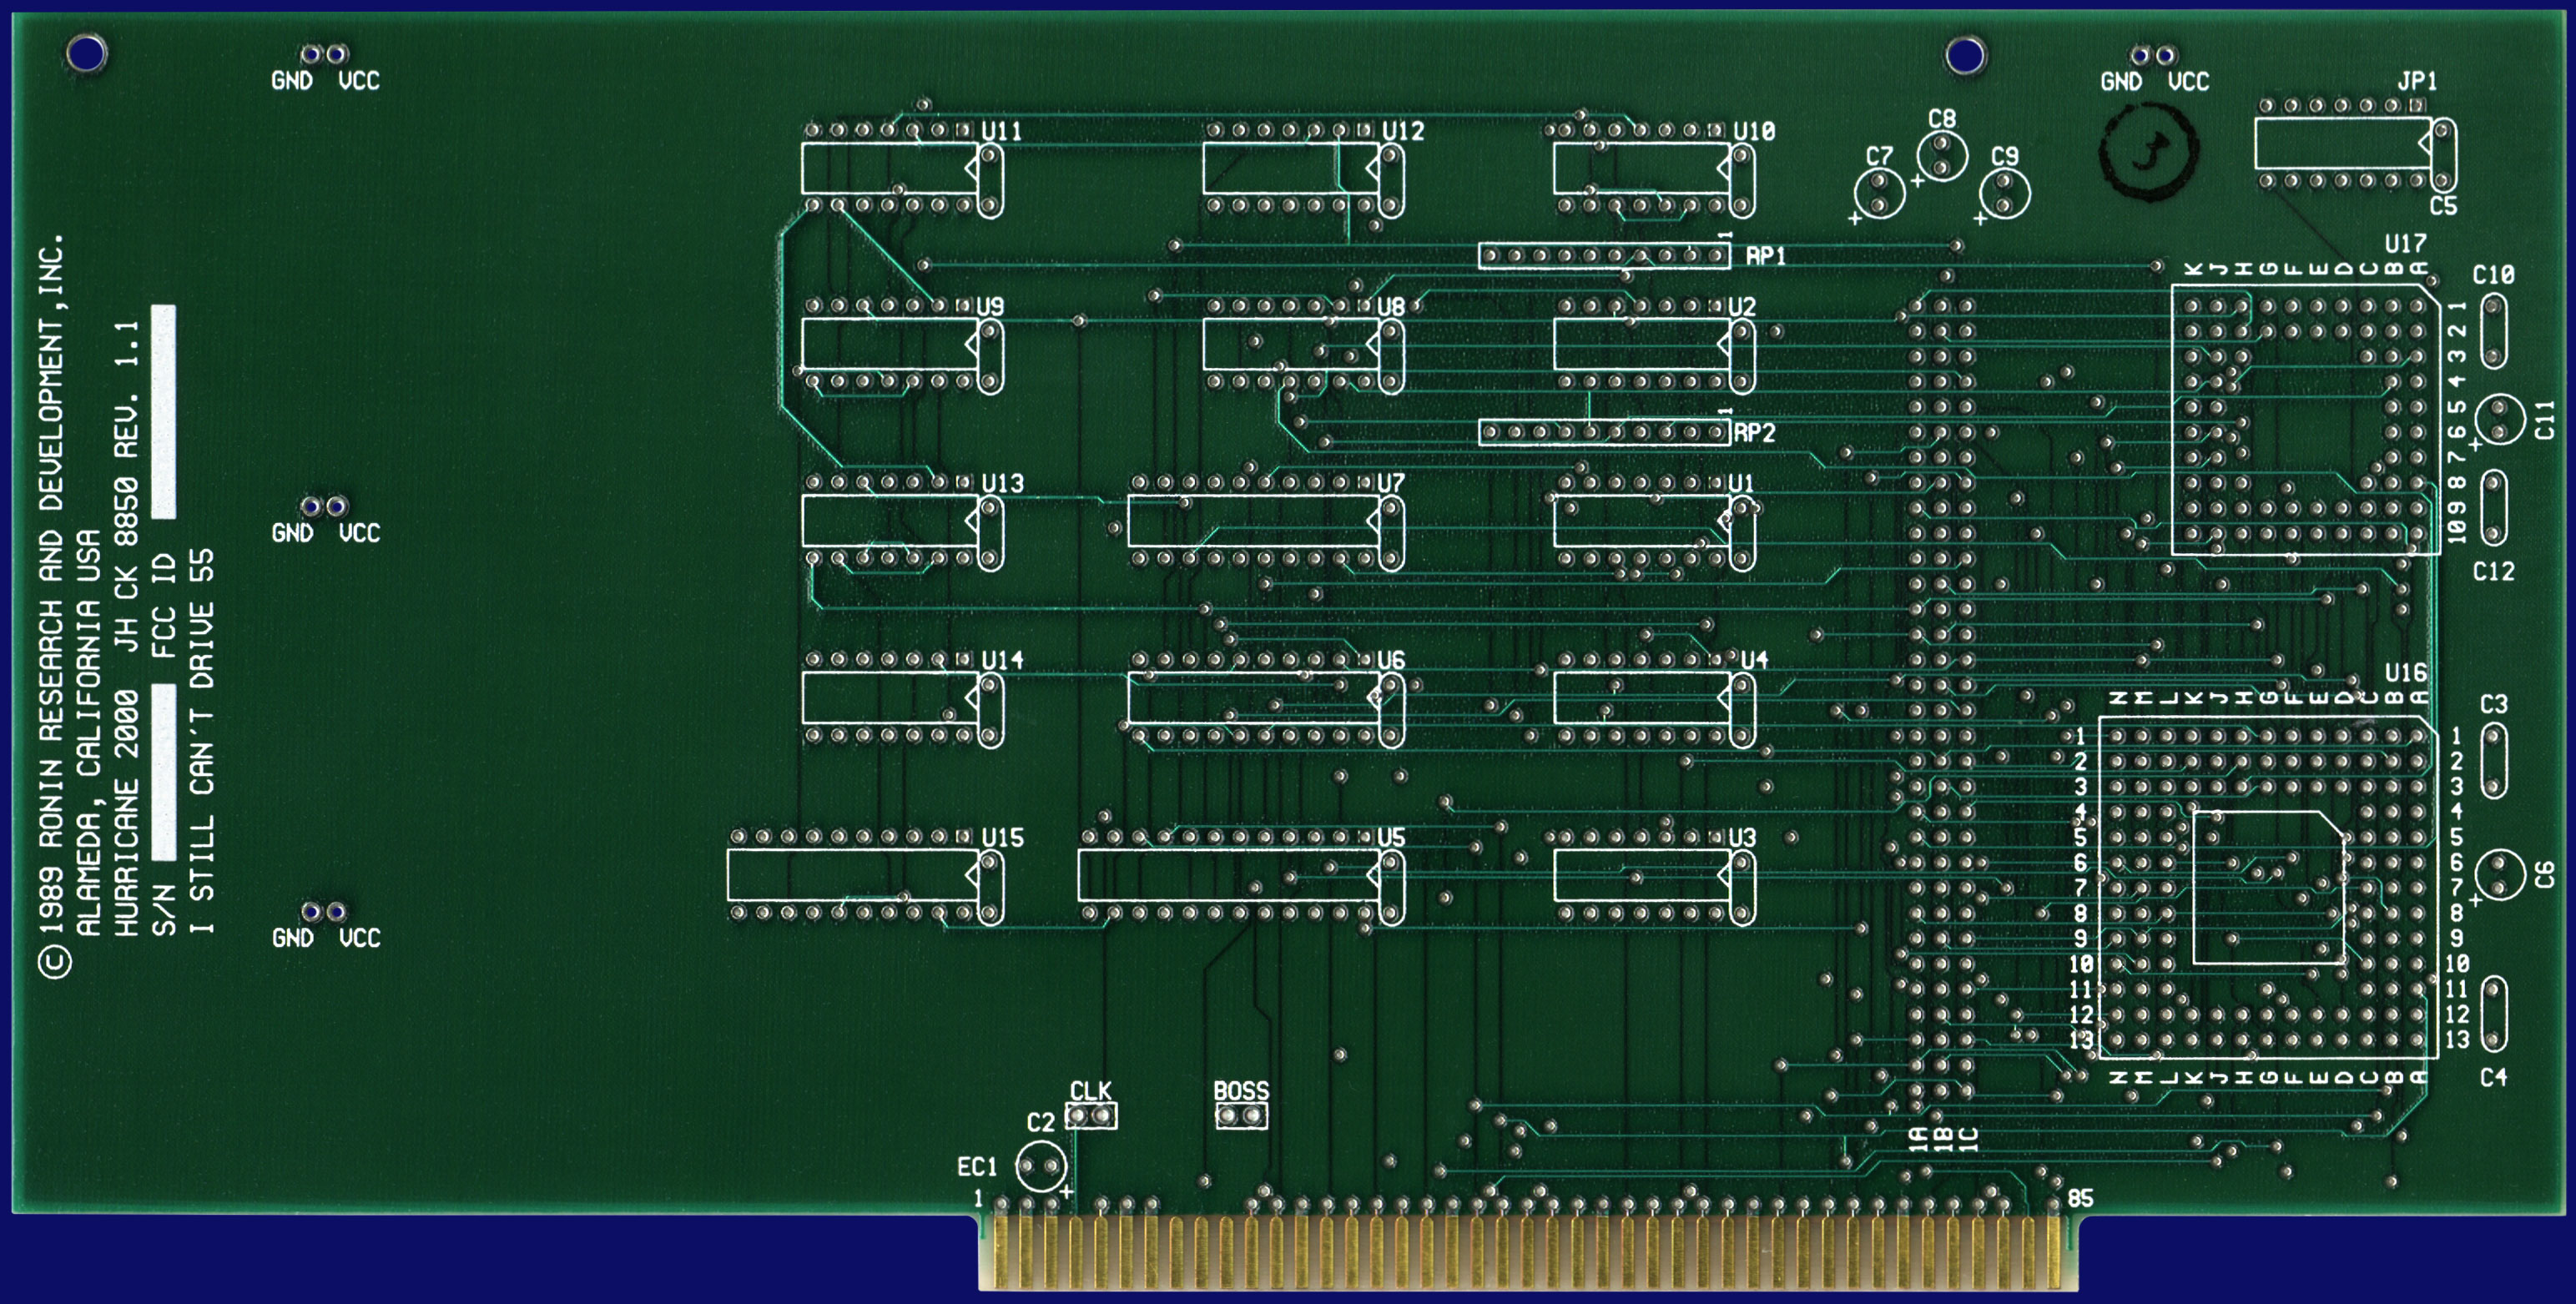 Ronin / IMtronics Hurricane 2000 - blank CPU card, front side